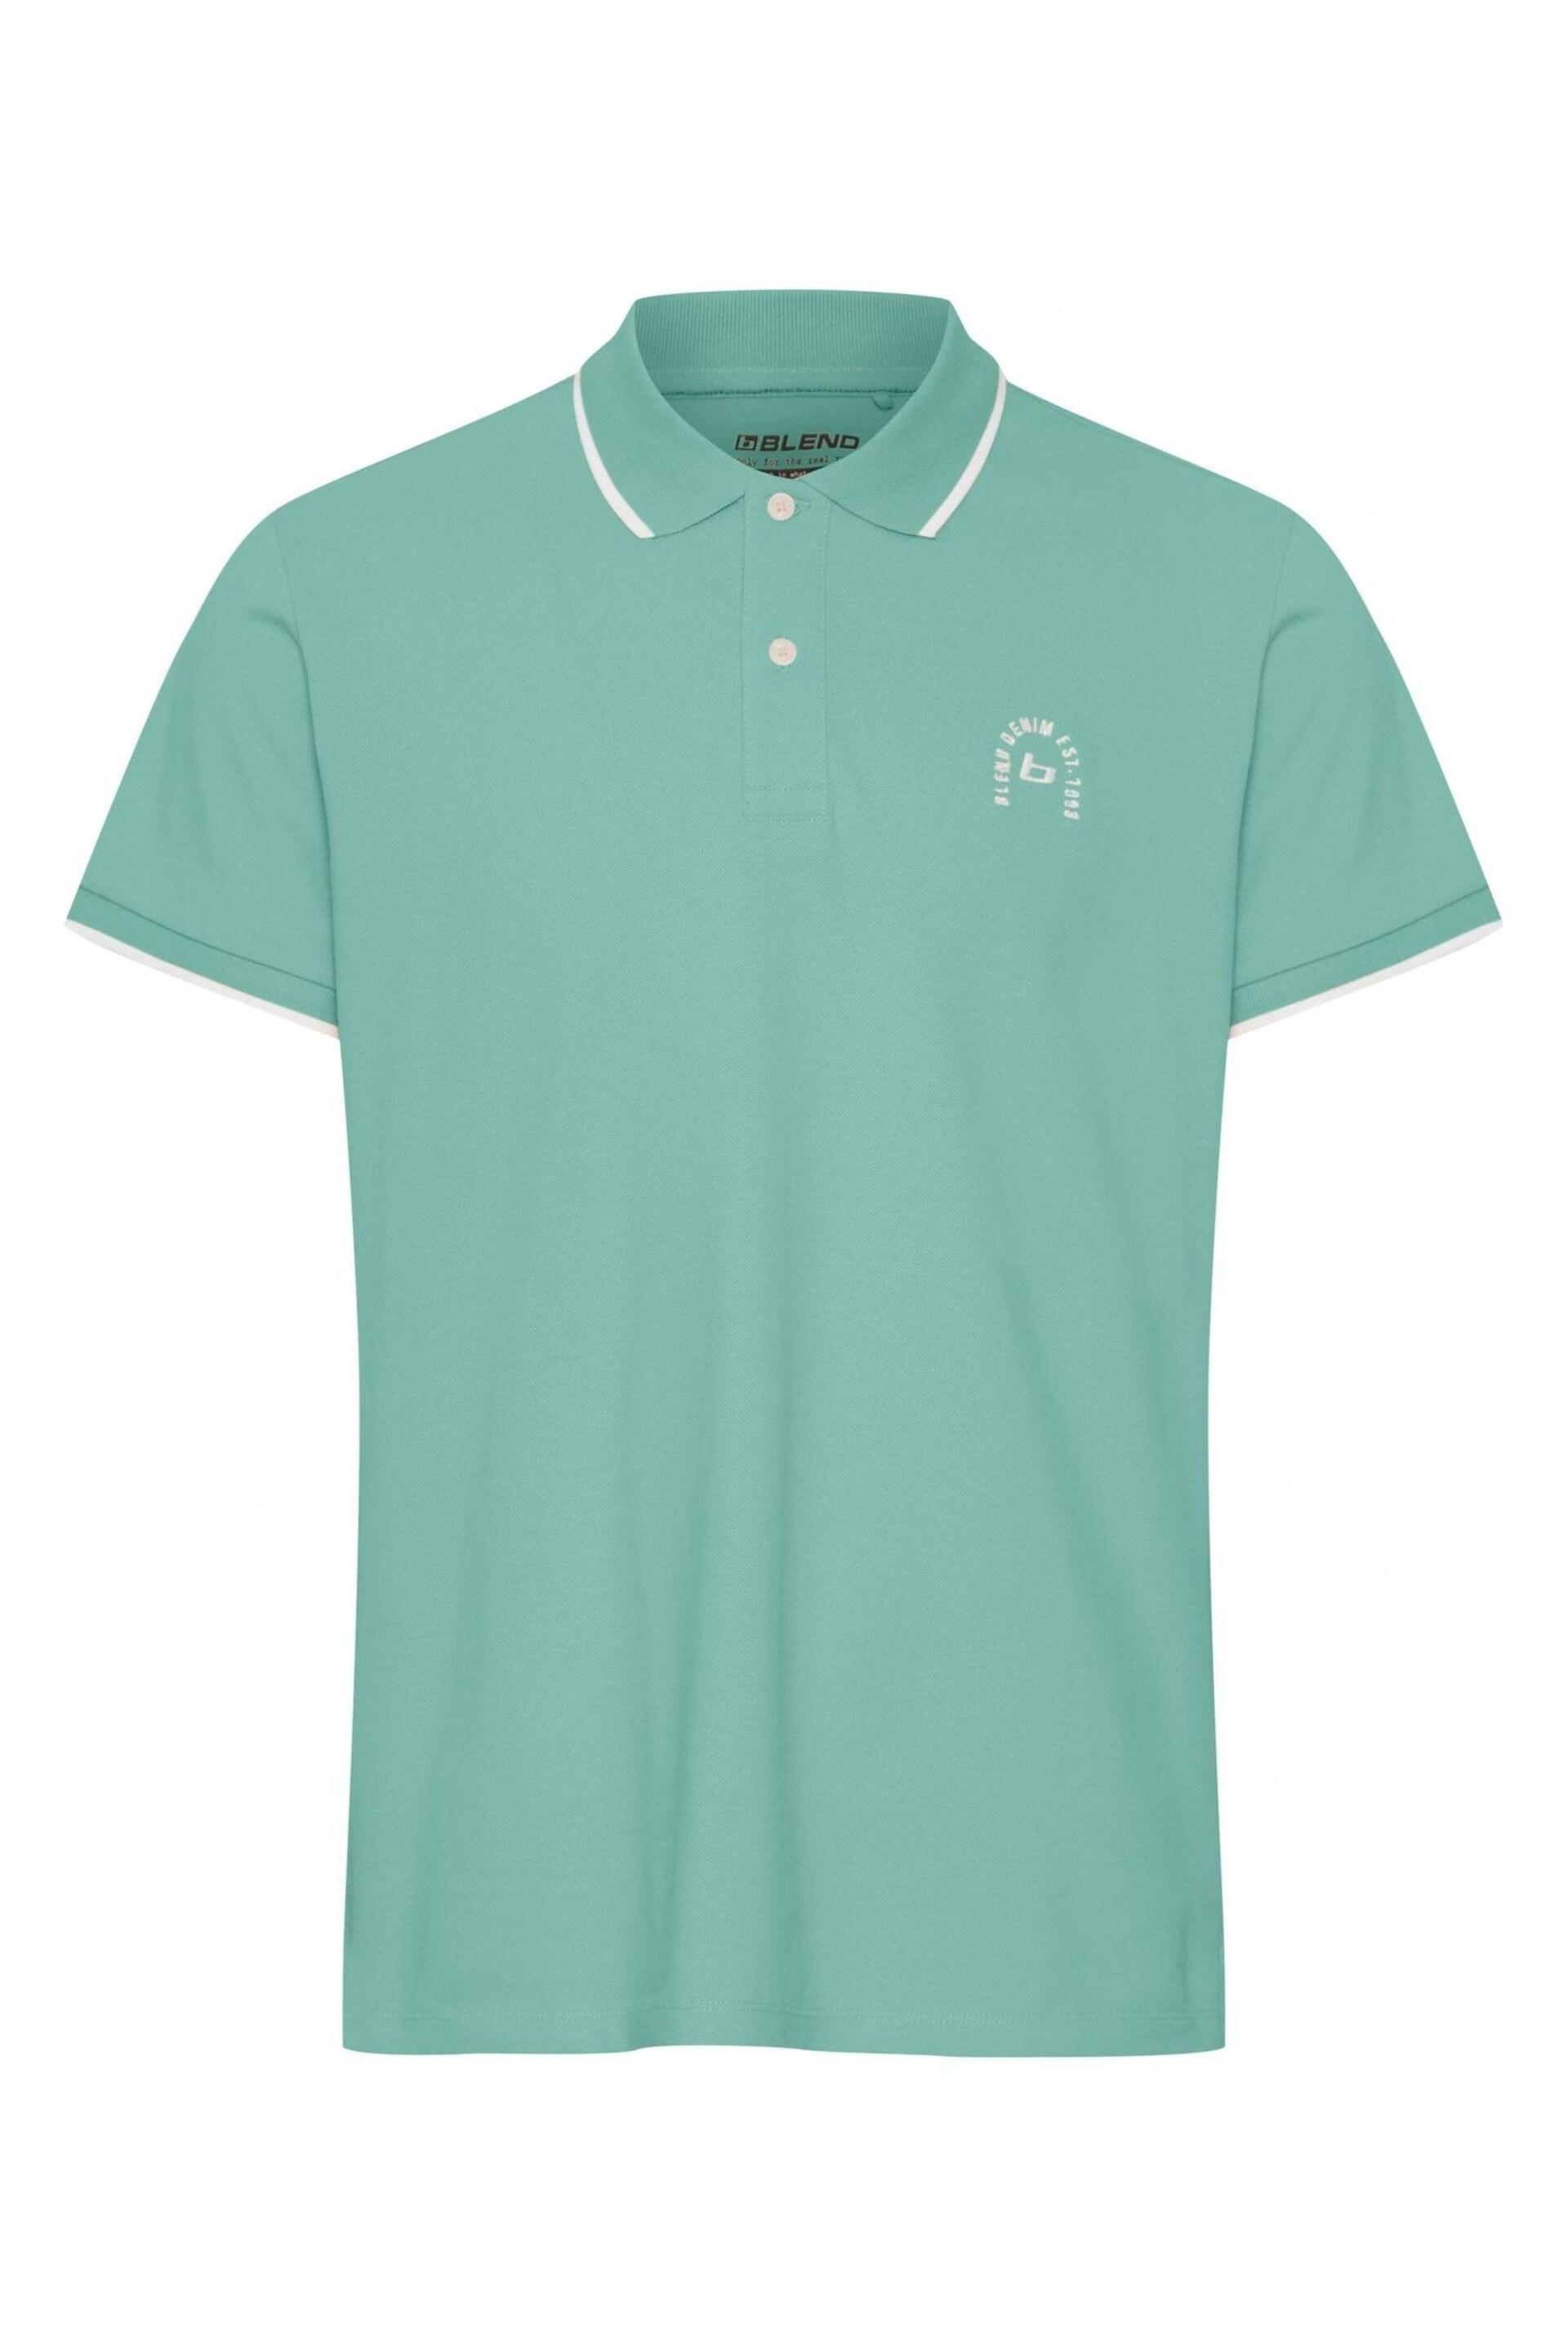 Blend Green Pique Short Sleeve Polo Shirt - Image 4 of 4